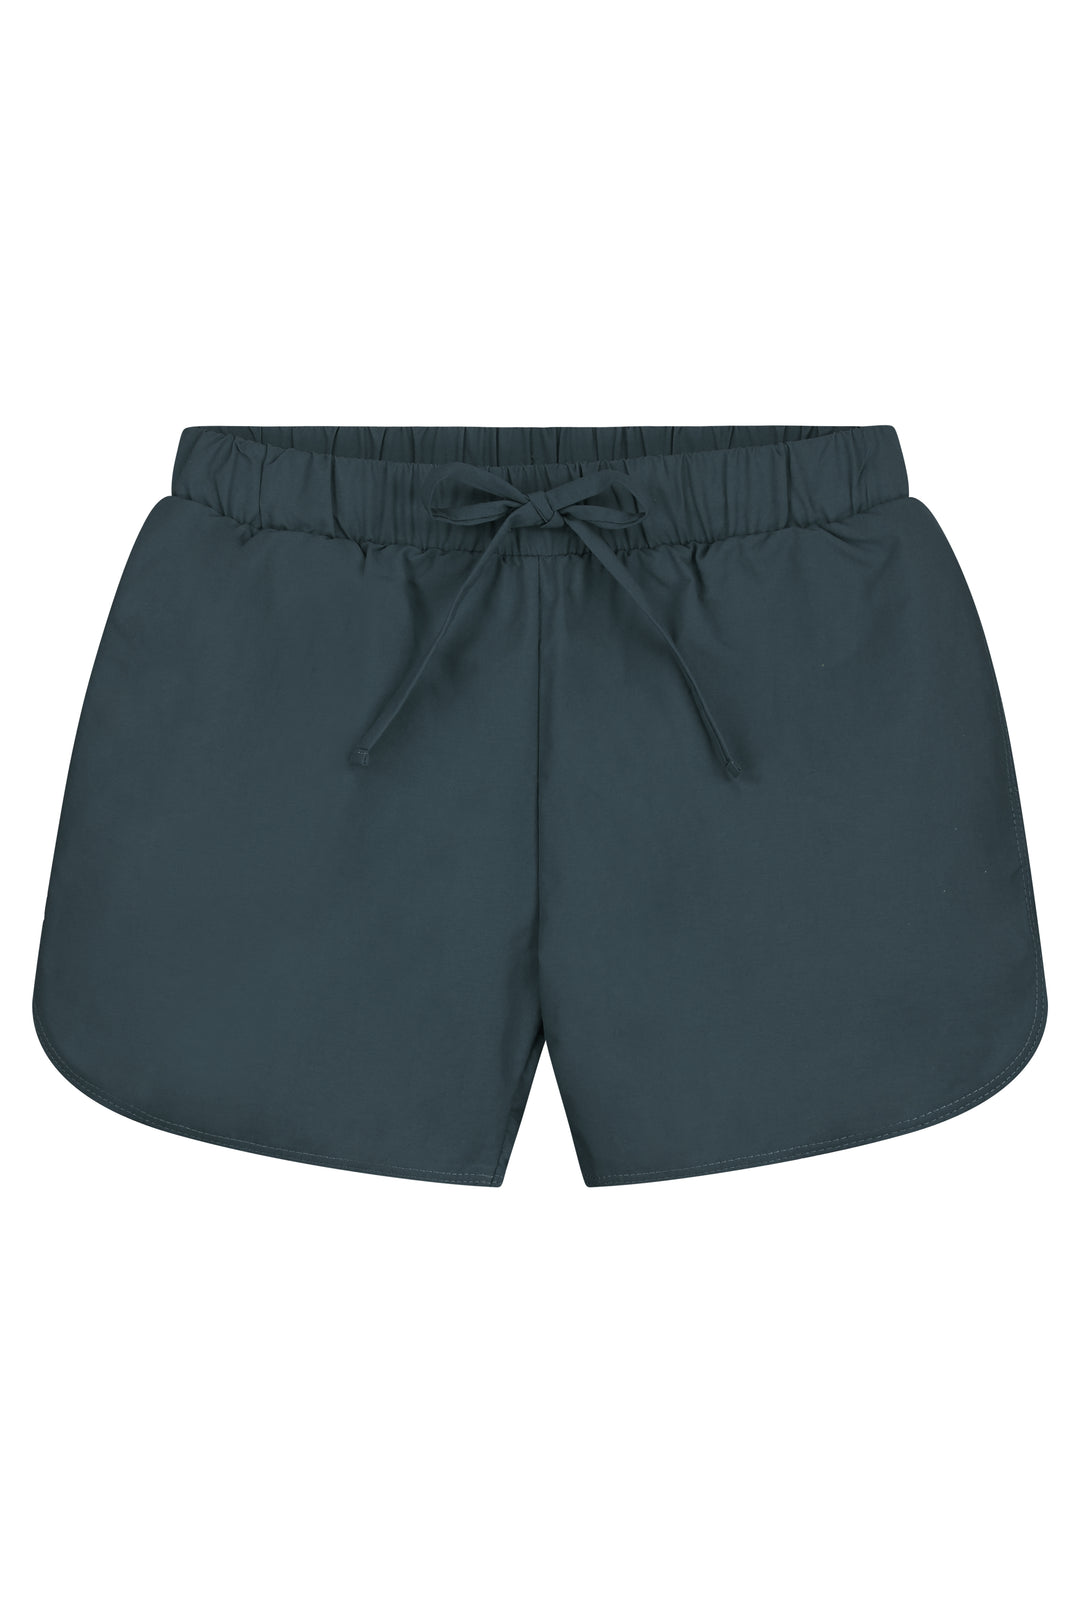 Gray Label Swim Shorts, Blue Grey